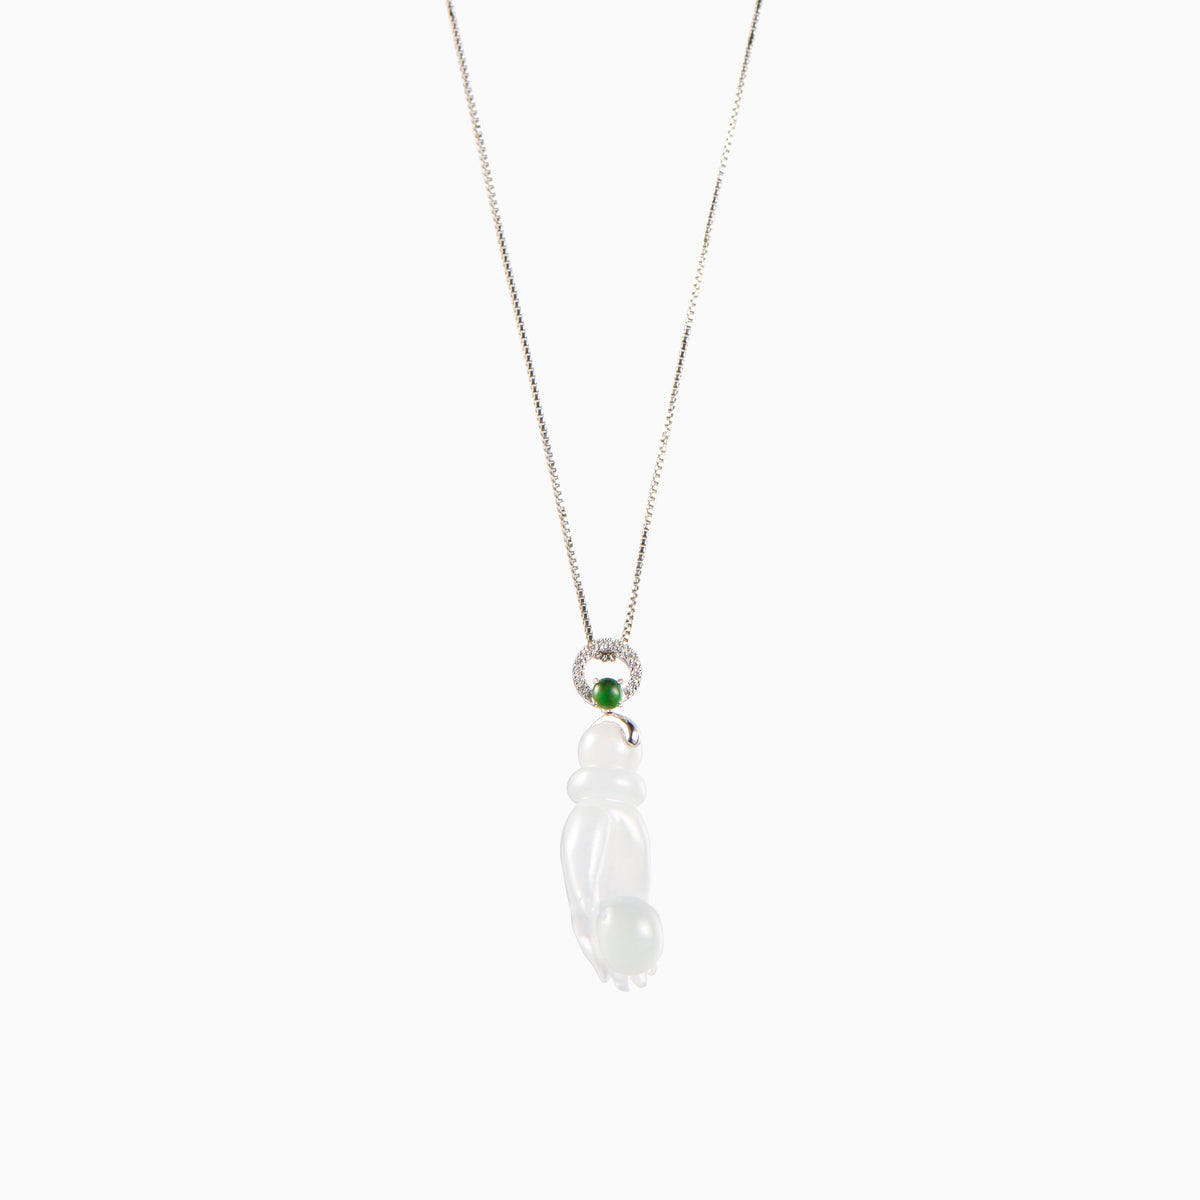 White jade buddha&#39;s hand pendant decorated with green jade and diamonds